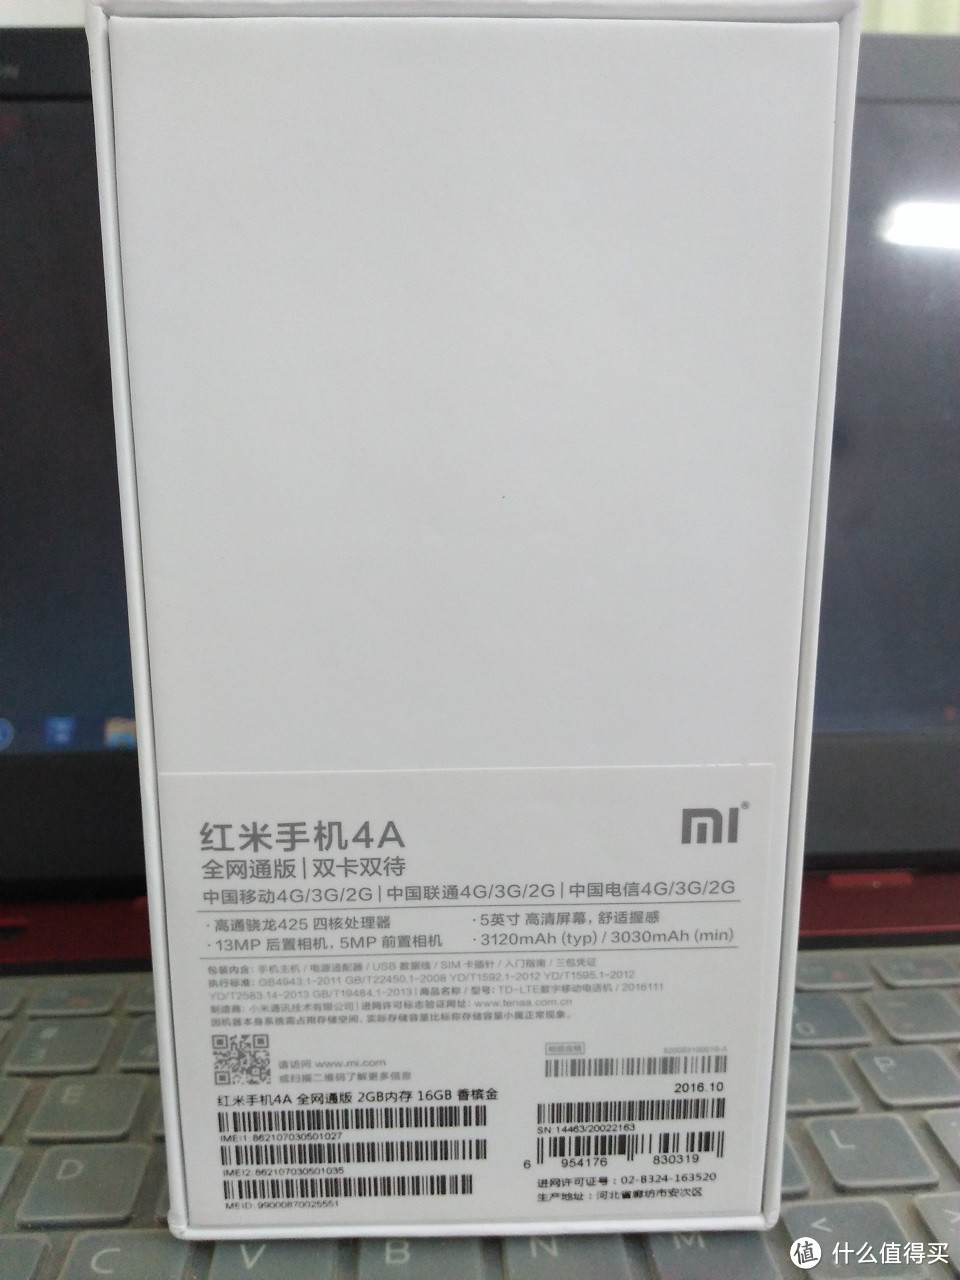 Mi 小米 红米4A手机 评测